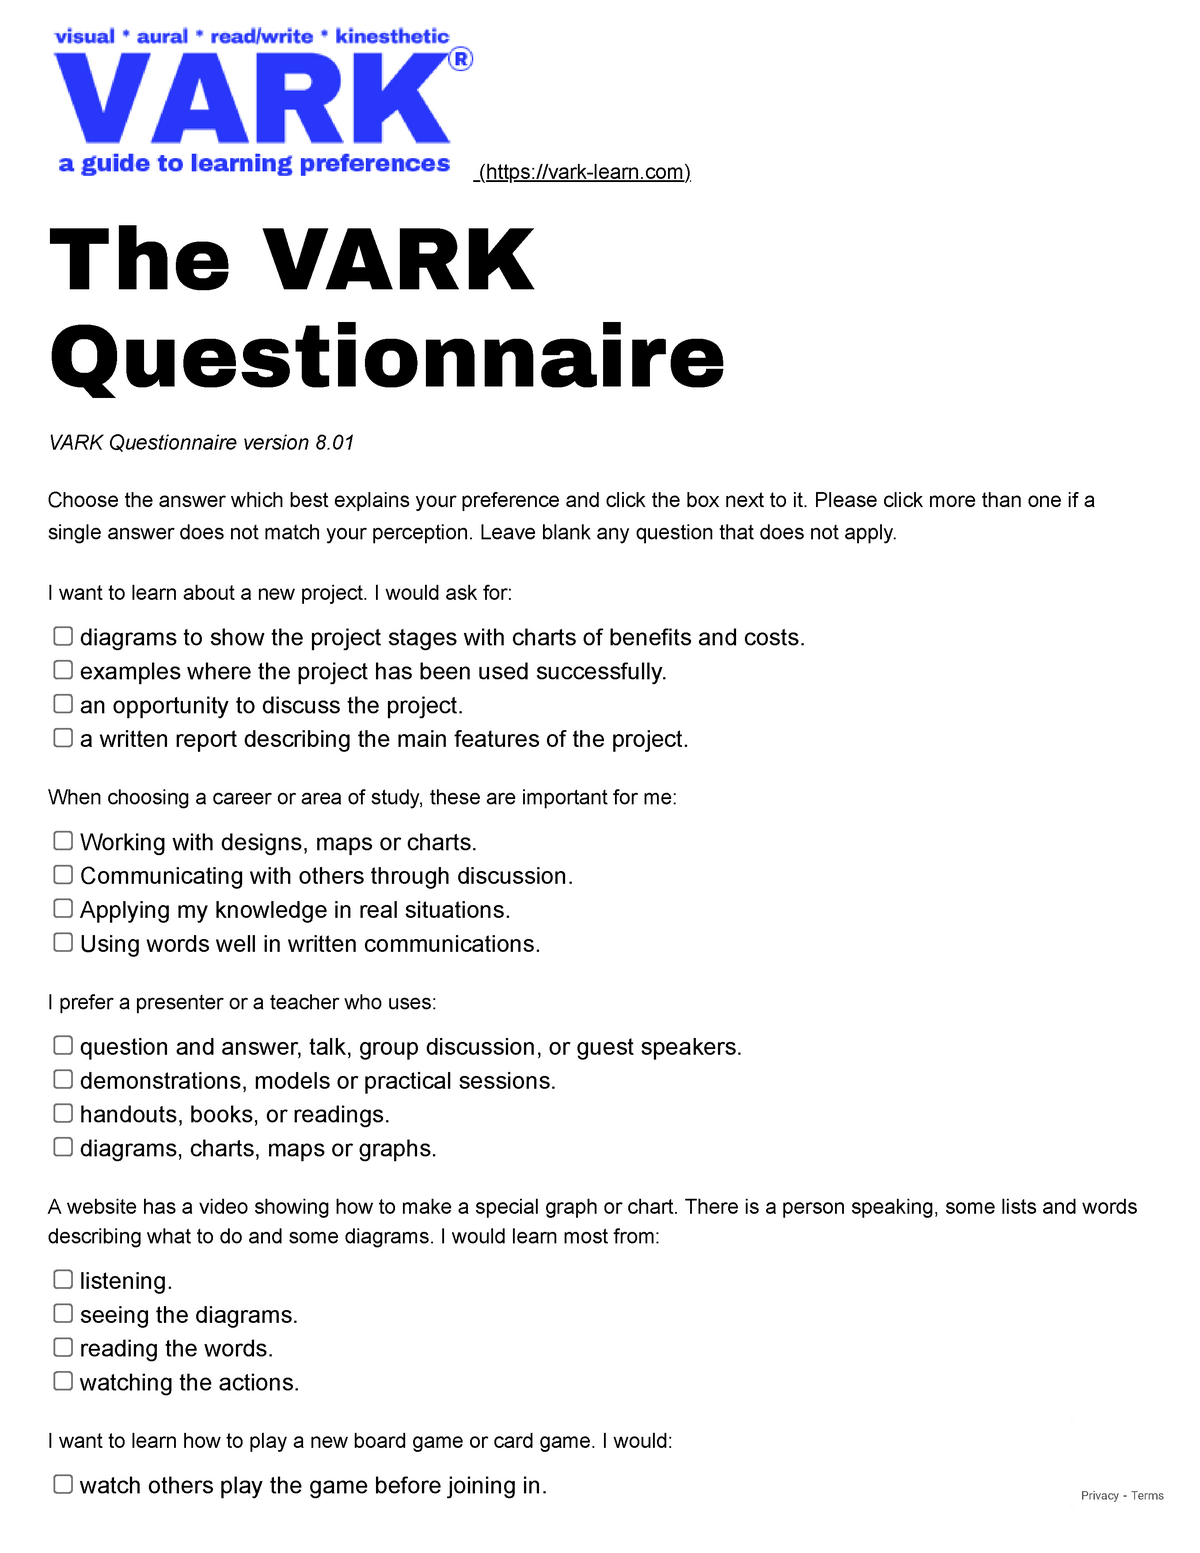 printable-vark-questionnaire